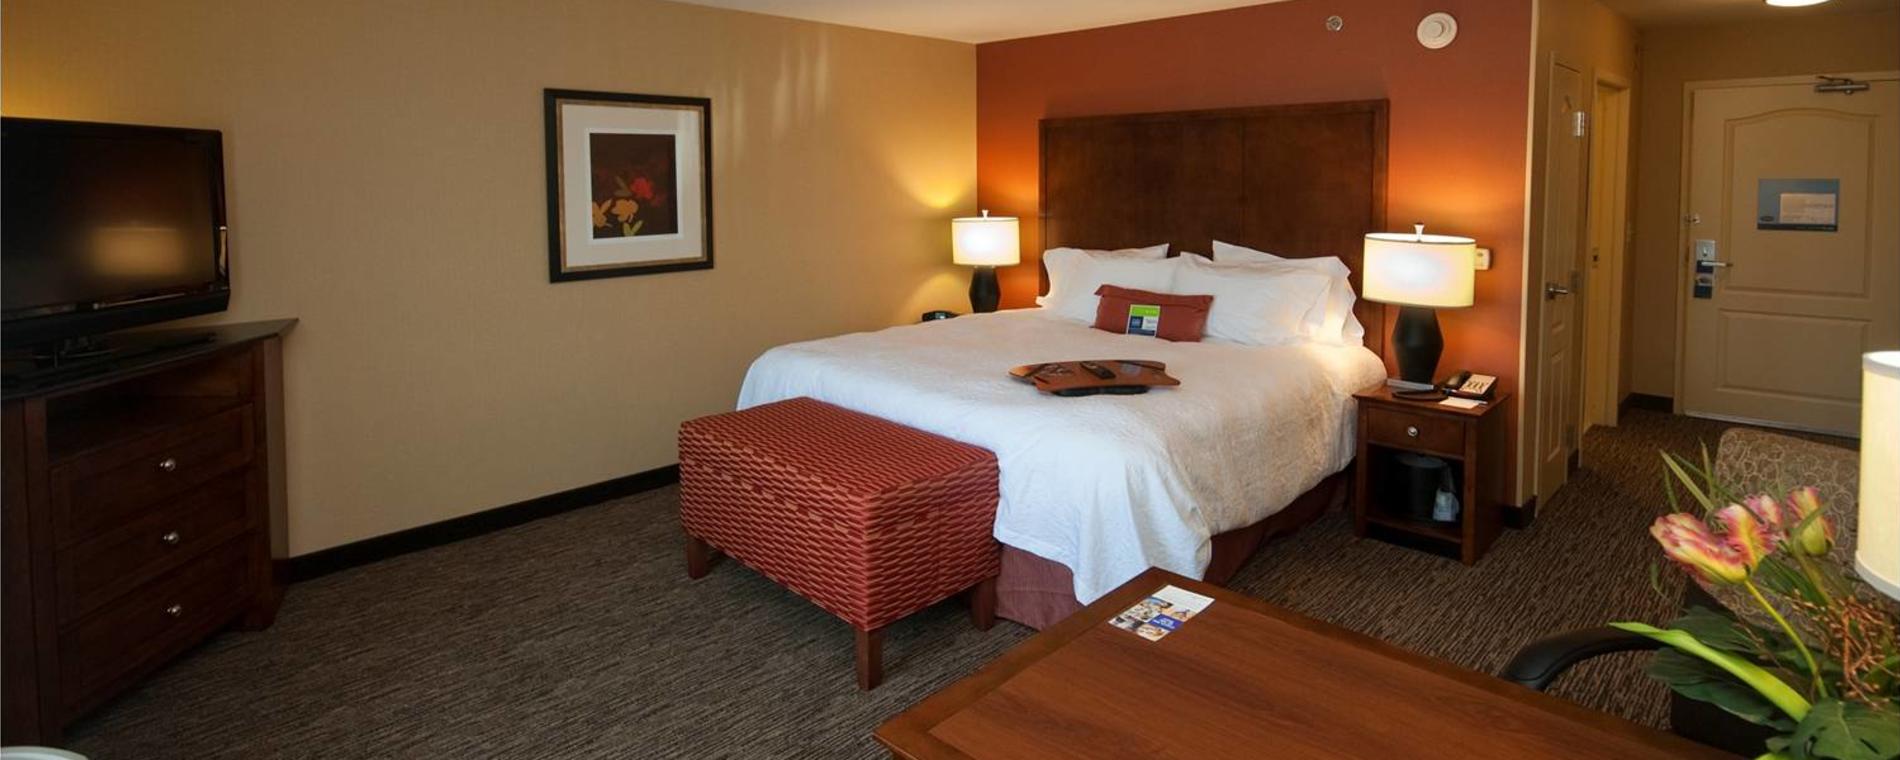 Hampton Inn & Suites Wichita Northeast_Standard King